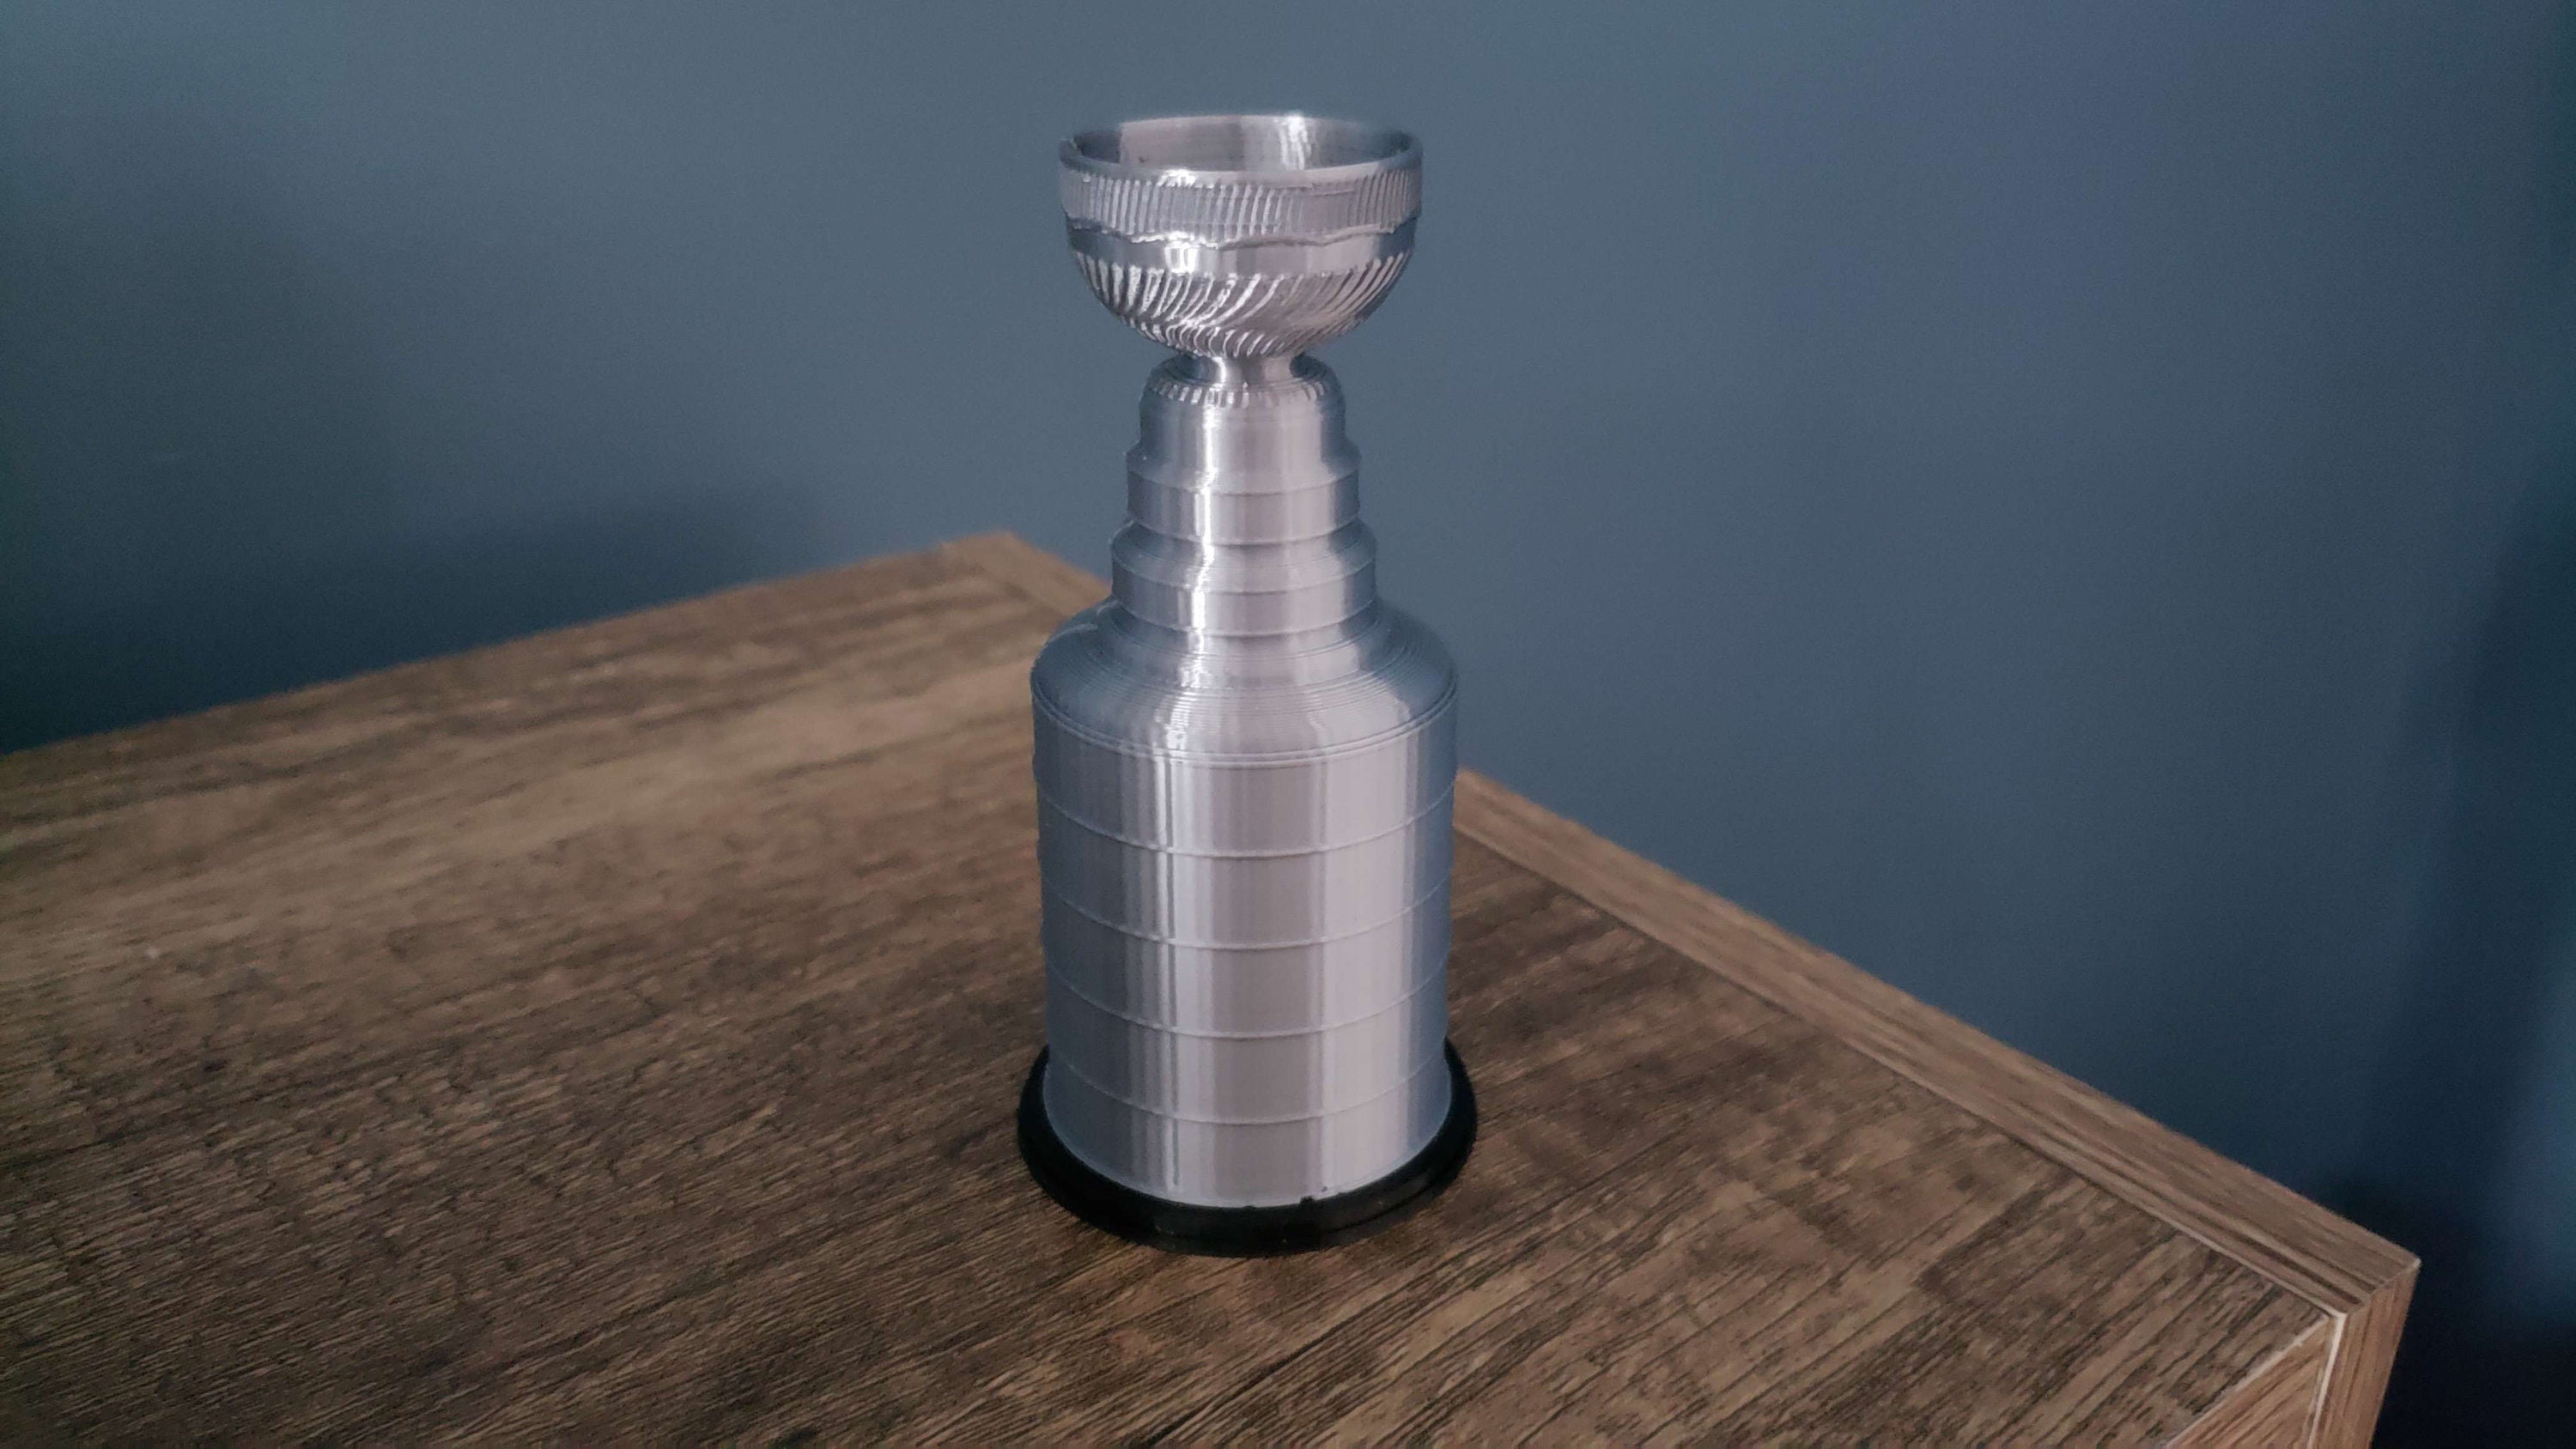 Mini Stanley Cup, Brickipedia